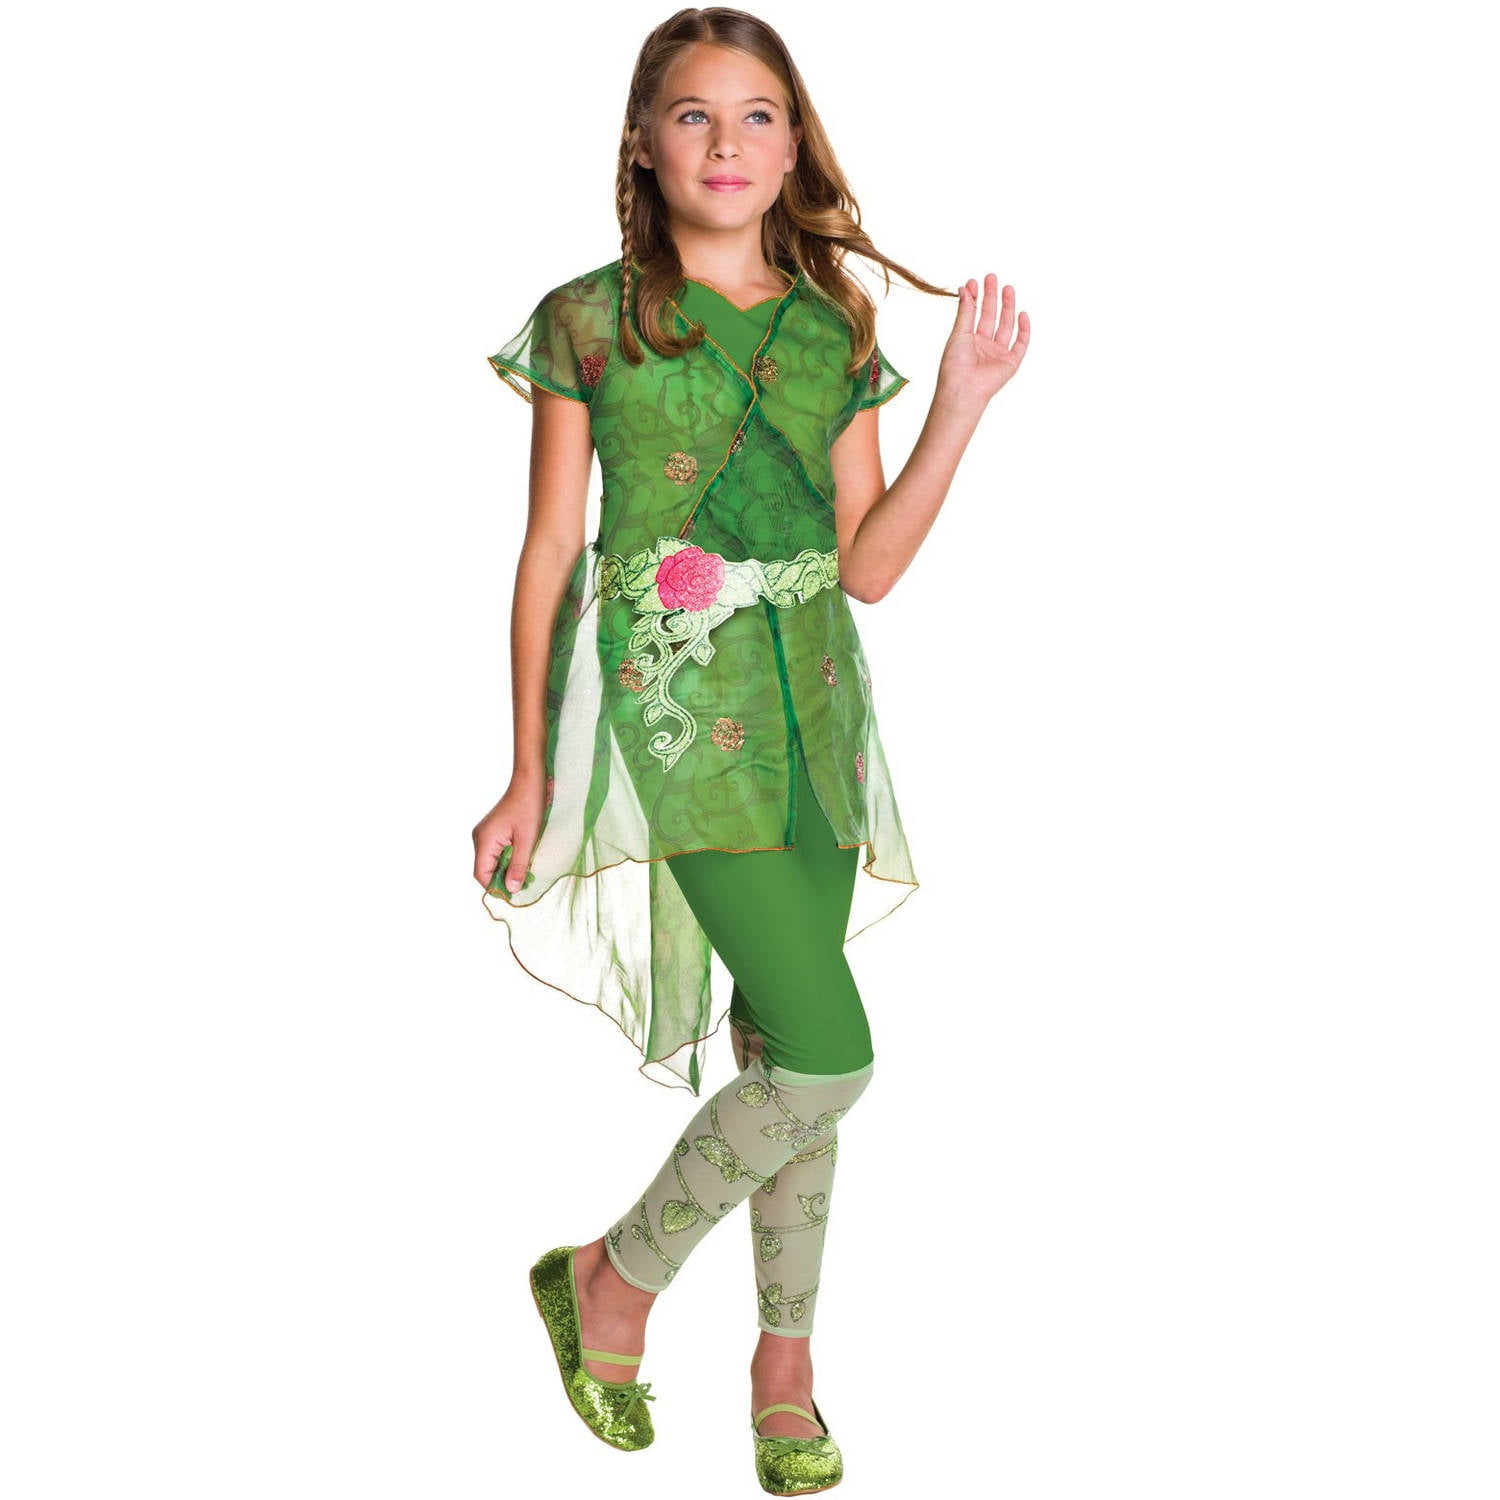 Dc Superhero Girls Poison Ivy Deluxe Child Halloween Costume Walmart Com Walmart Com